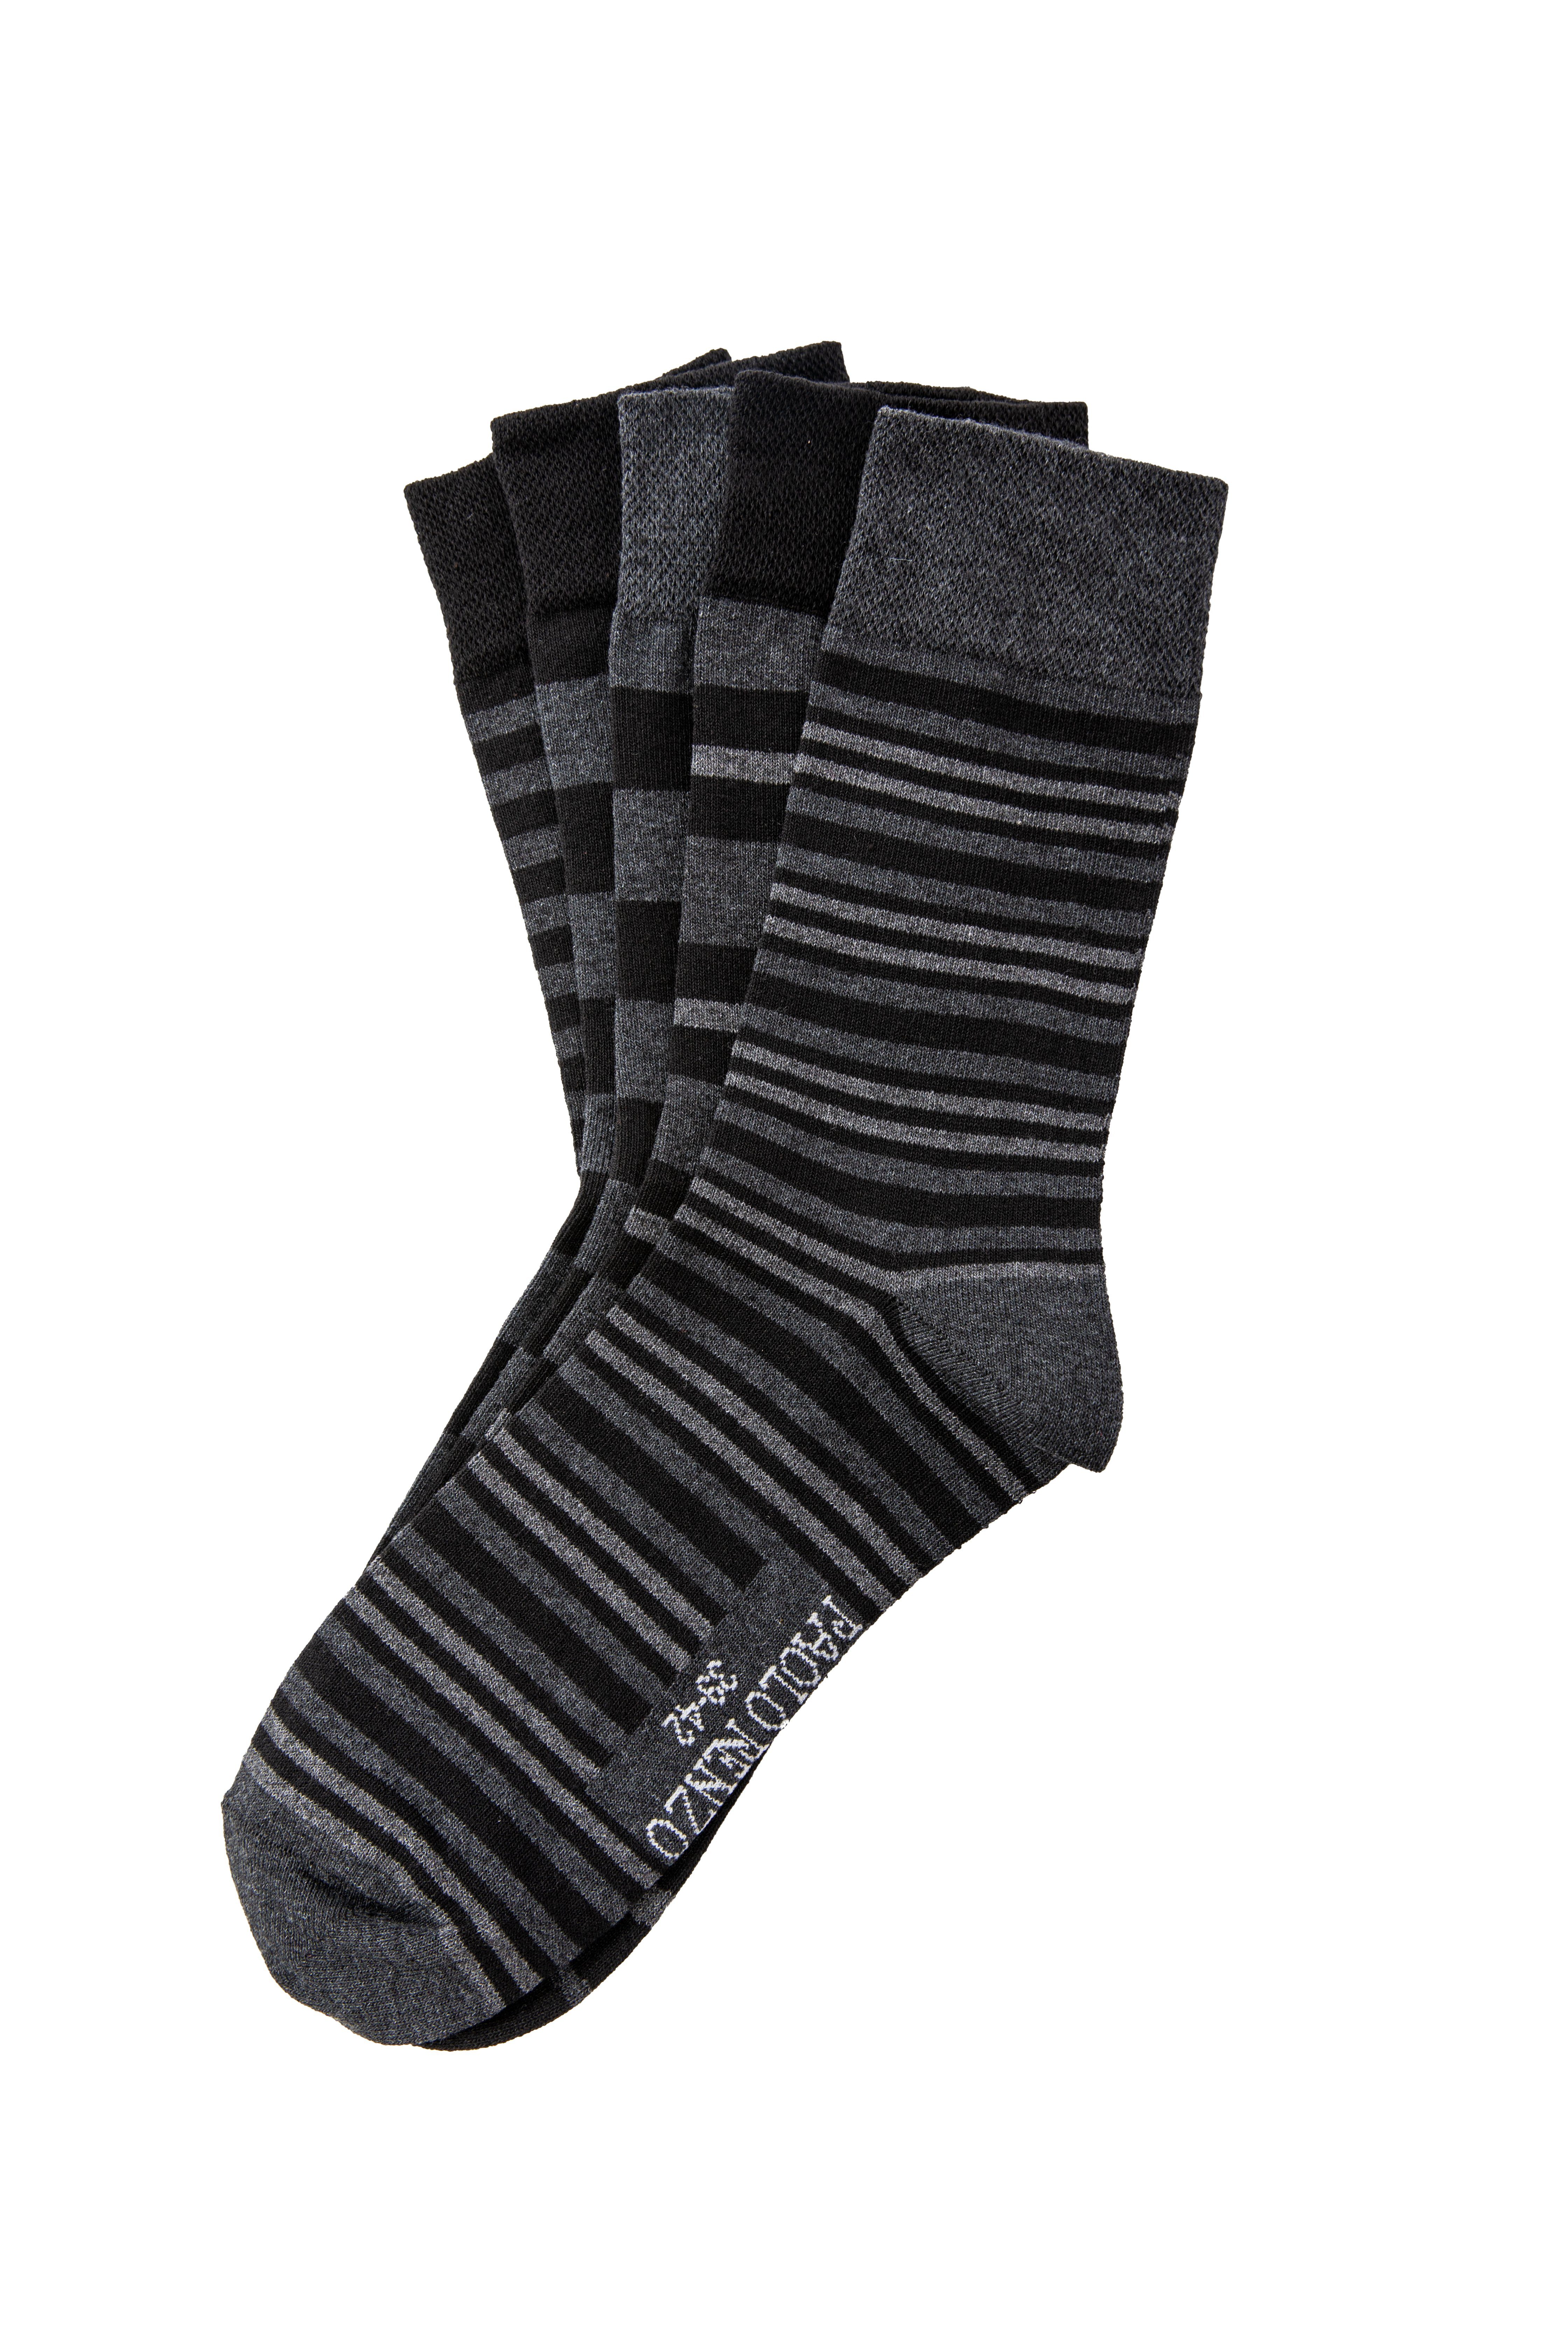 Renzo Businesssocken Paolo aus Baumwolle Herren hochwertiger (10-Paar) Socken Atmungsaktive Business